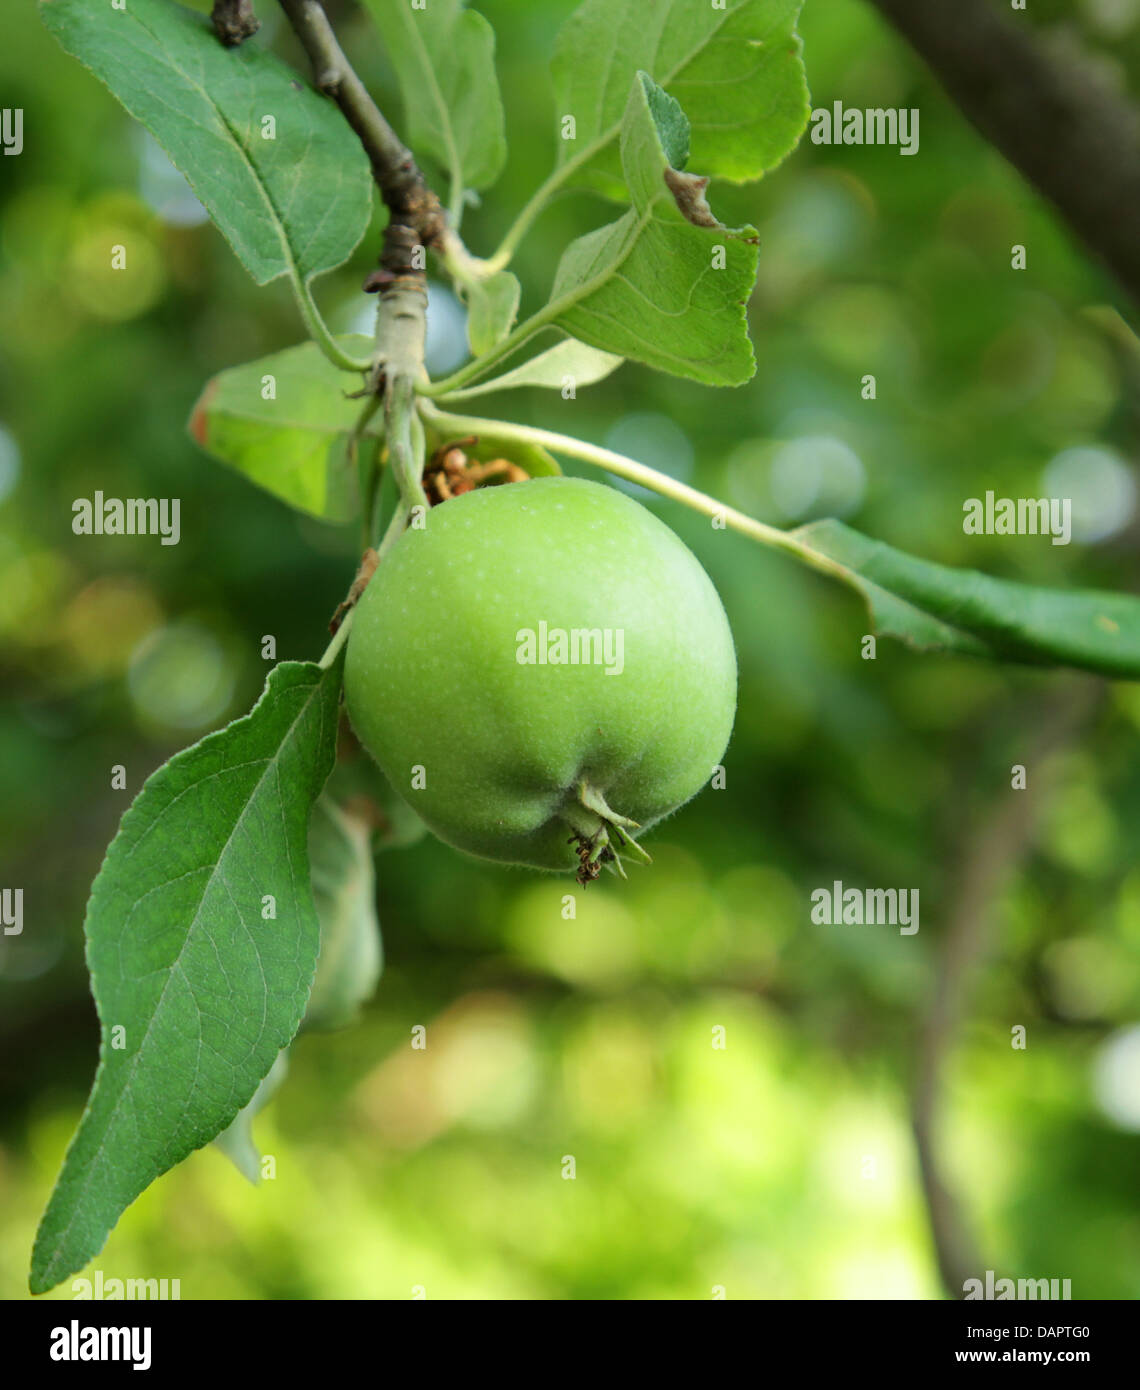 Green apple growing on tree Stock Photo